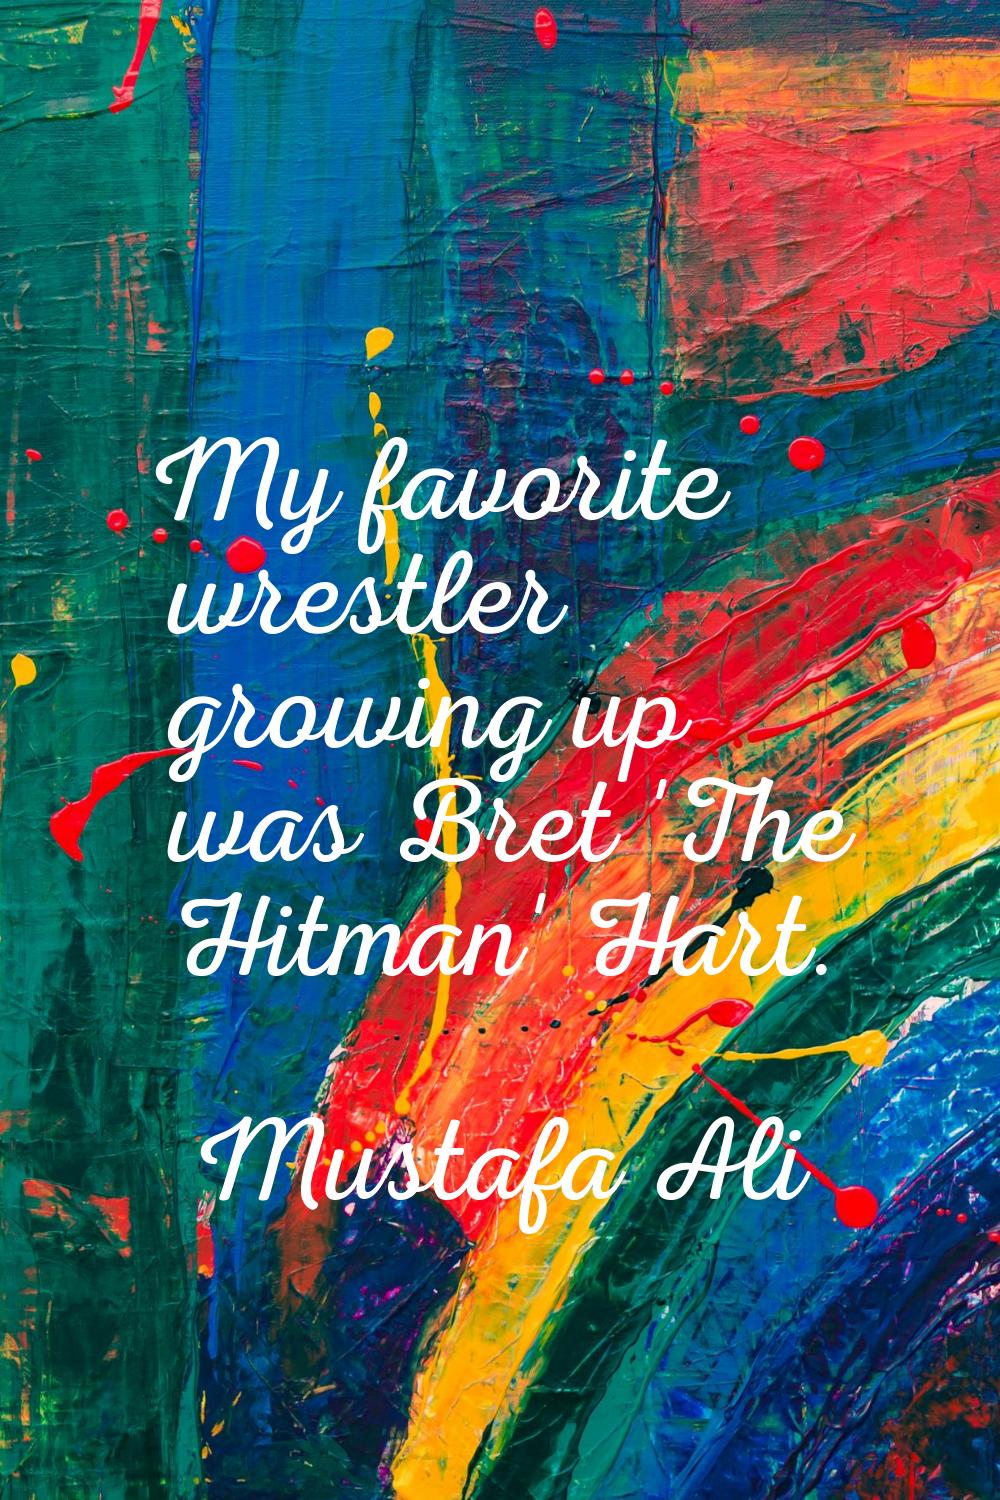 My favorite wrestler growing up was Bret 'The Hitman' Hart.